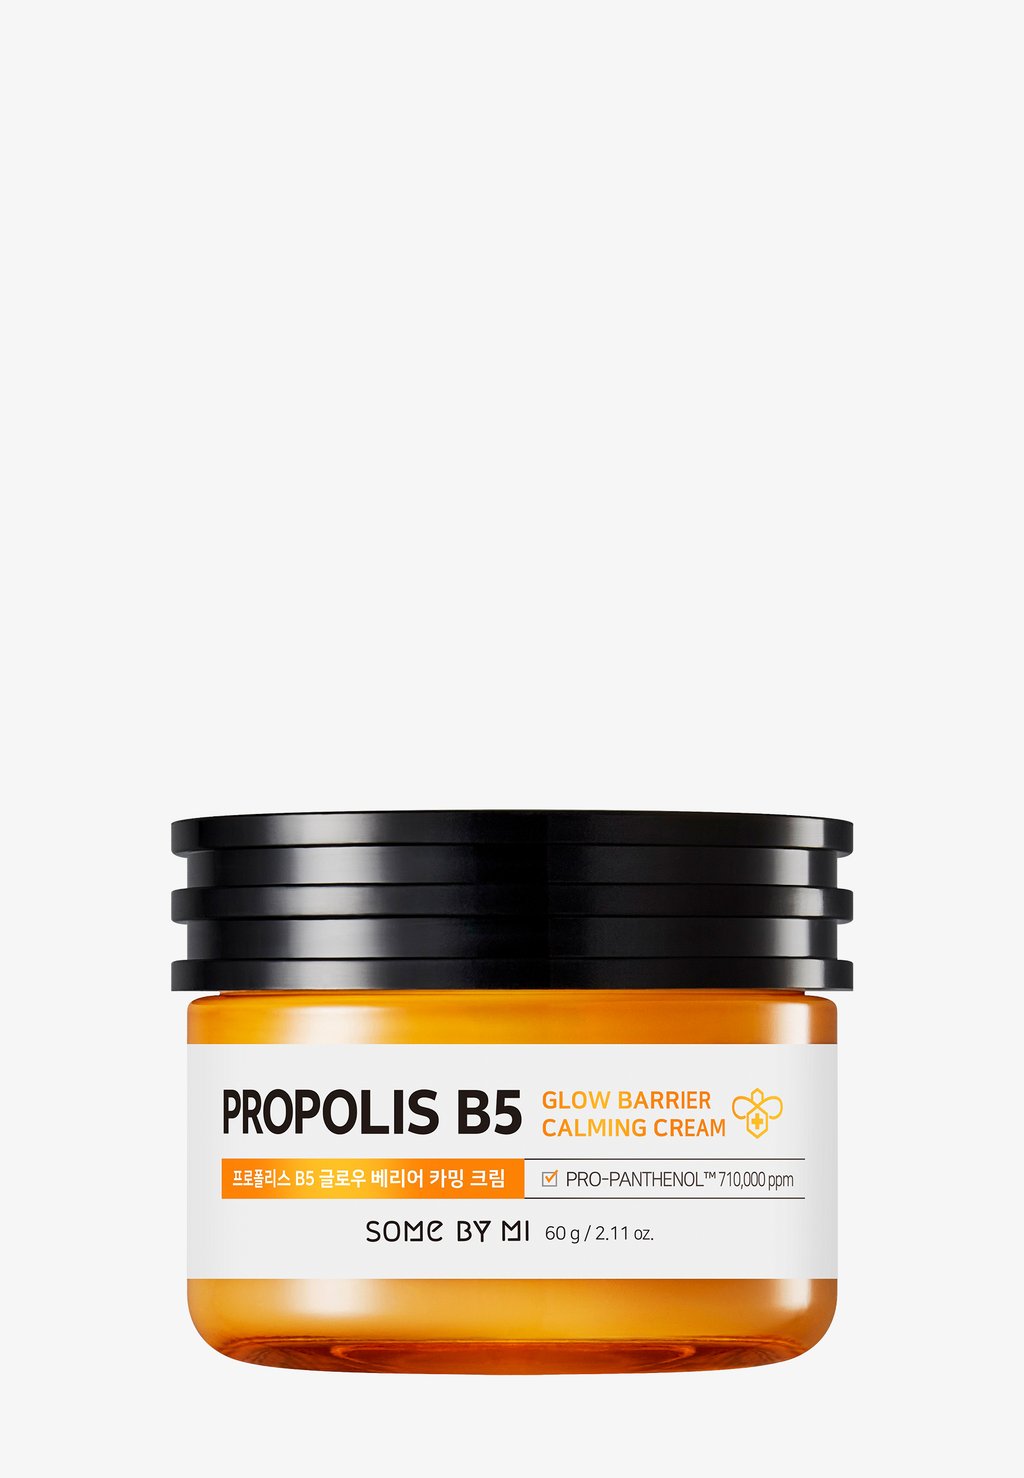 цена Дневной крем Propolis B5 Glow Barrier Calming Cream SOME BY MI